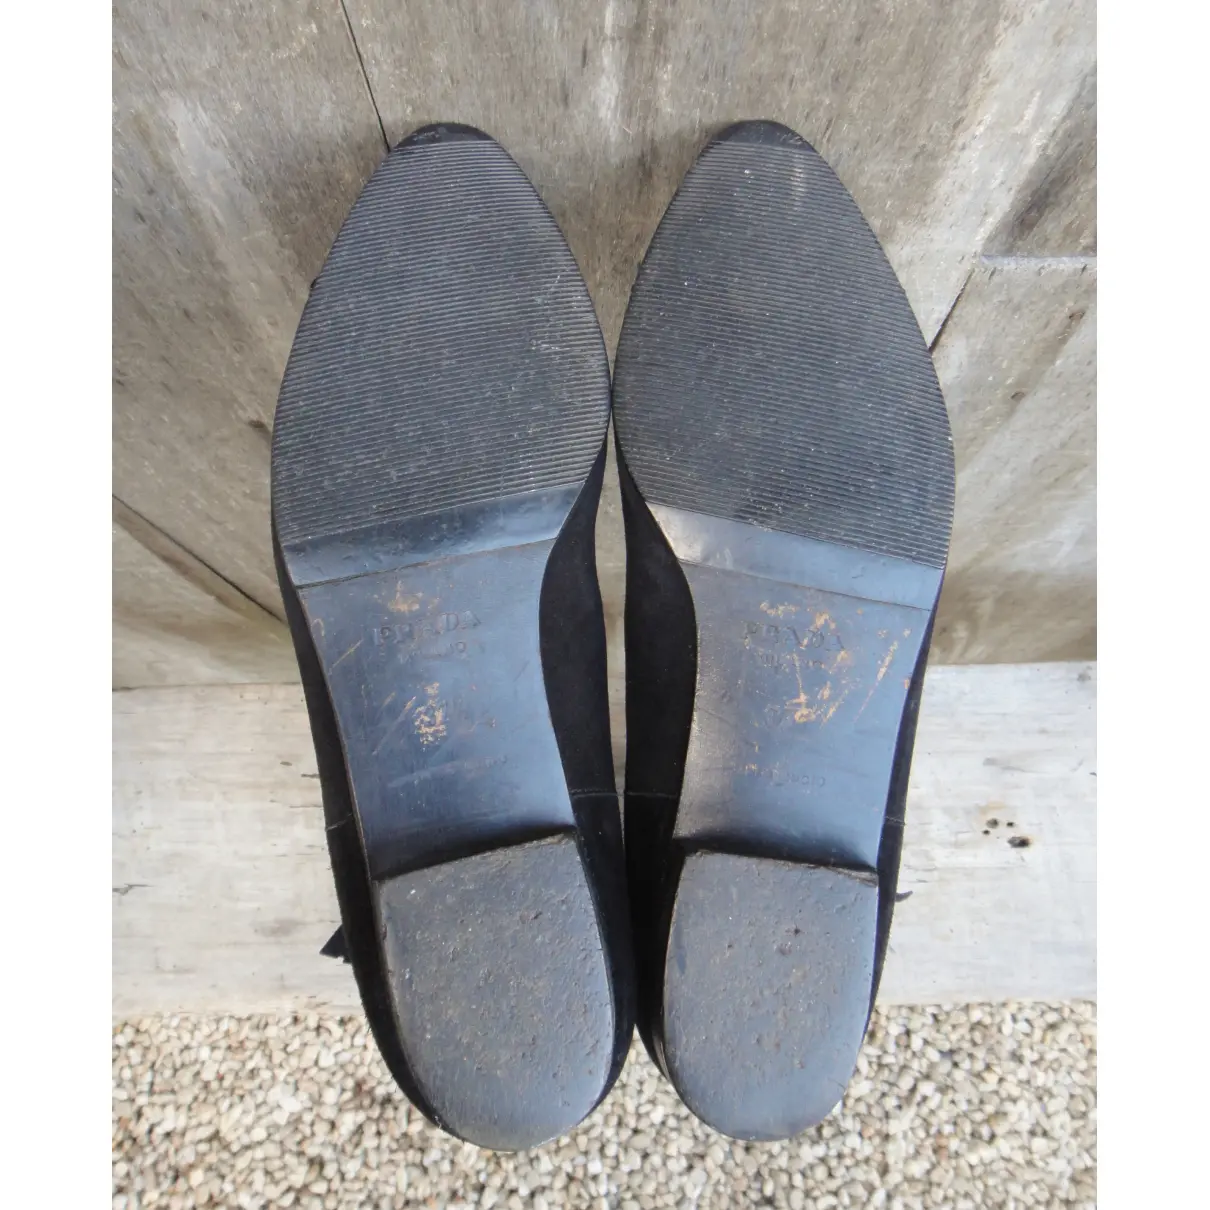 Boots Prada - Vintage